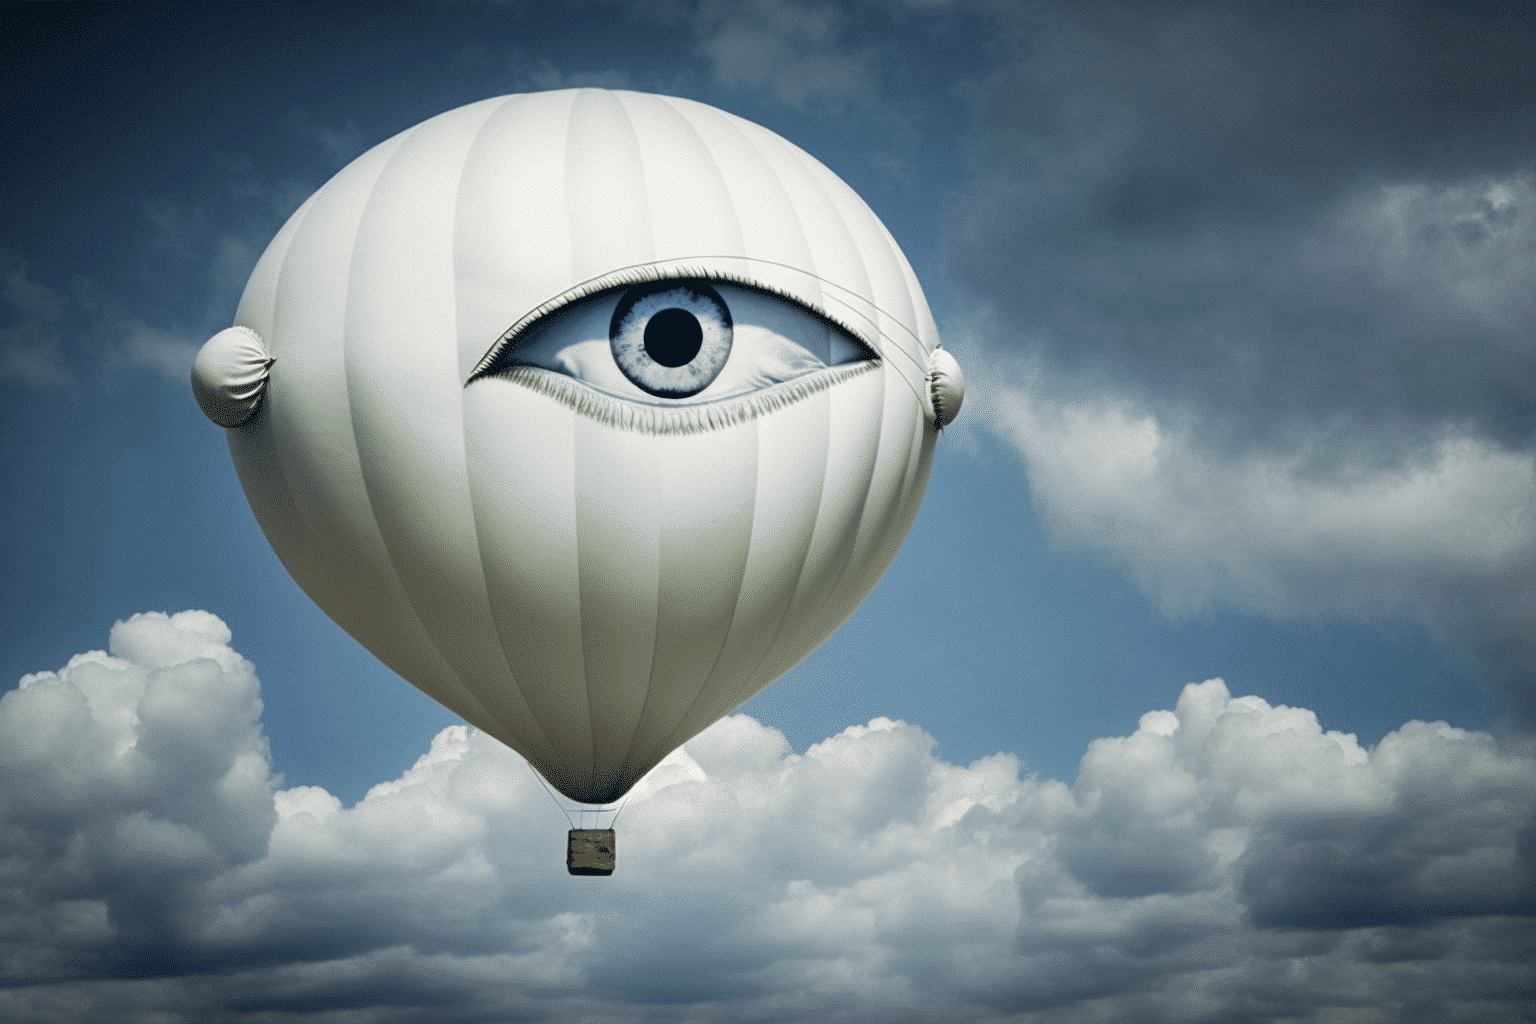 house-of-representatives-condemns-china-on-balloon-surveillance